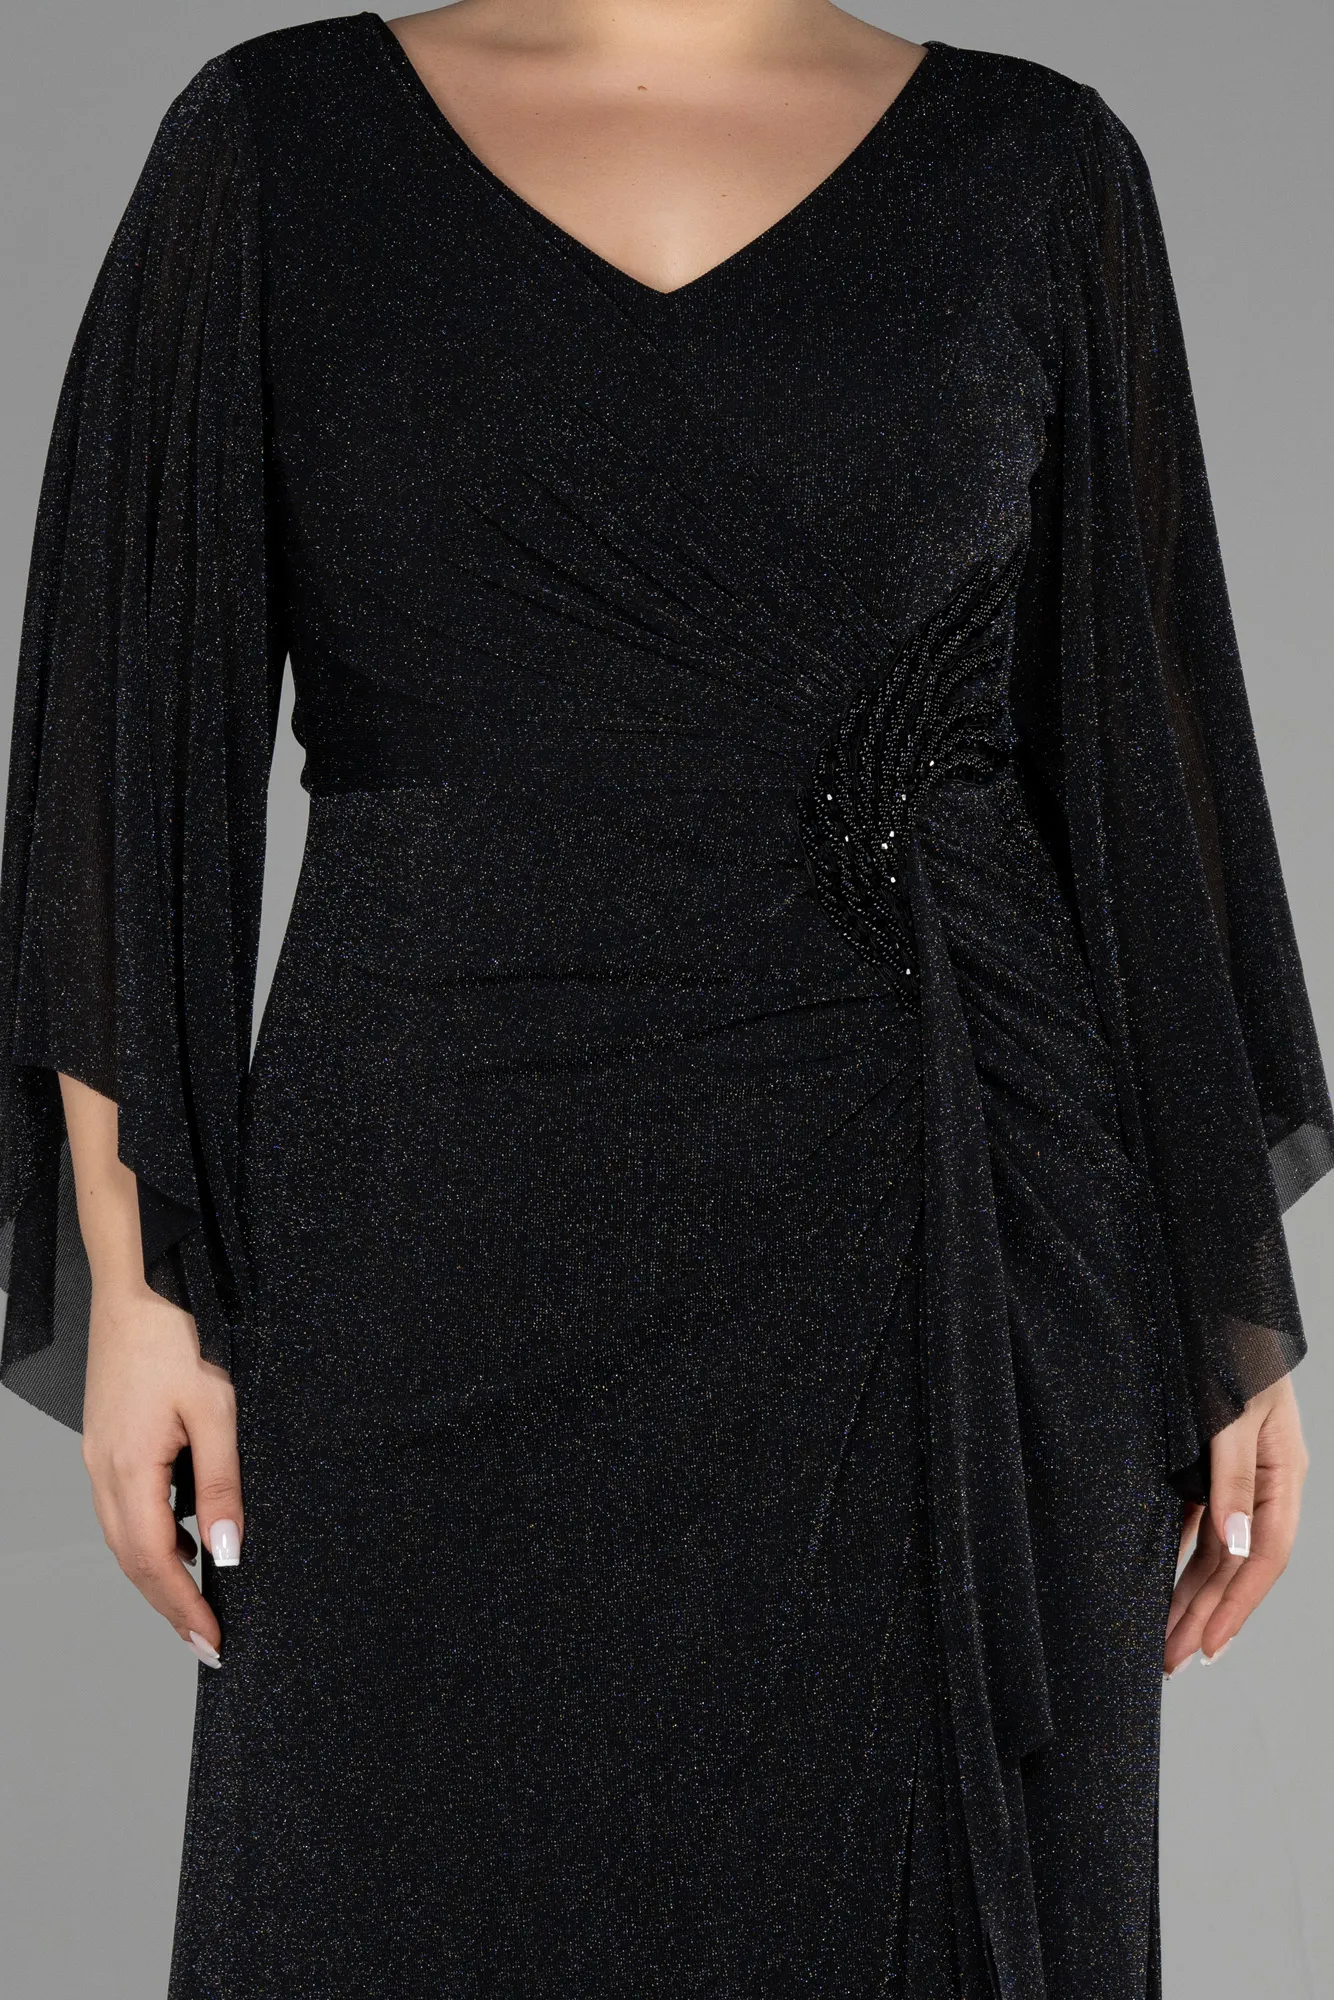 Black-Long Plus Size Evening Dress ABU3486